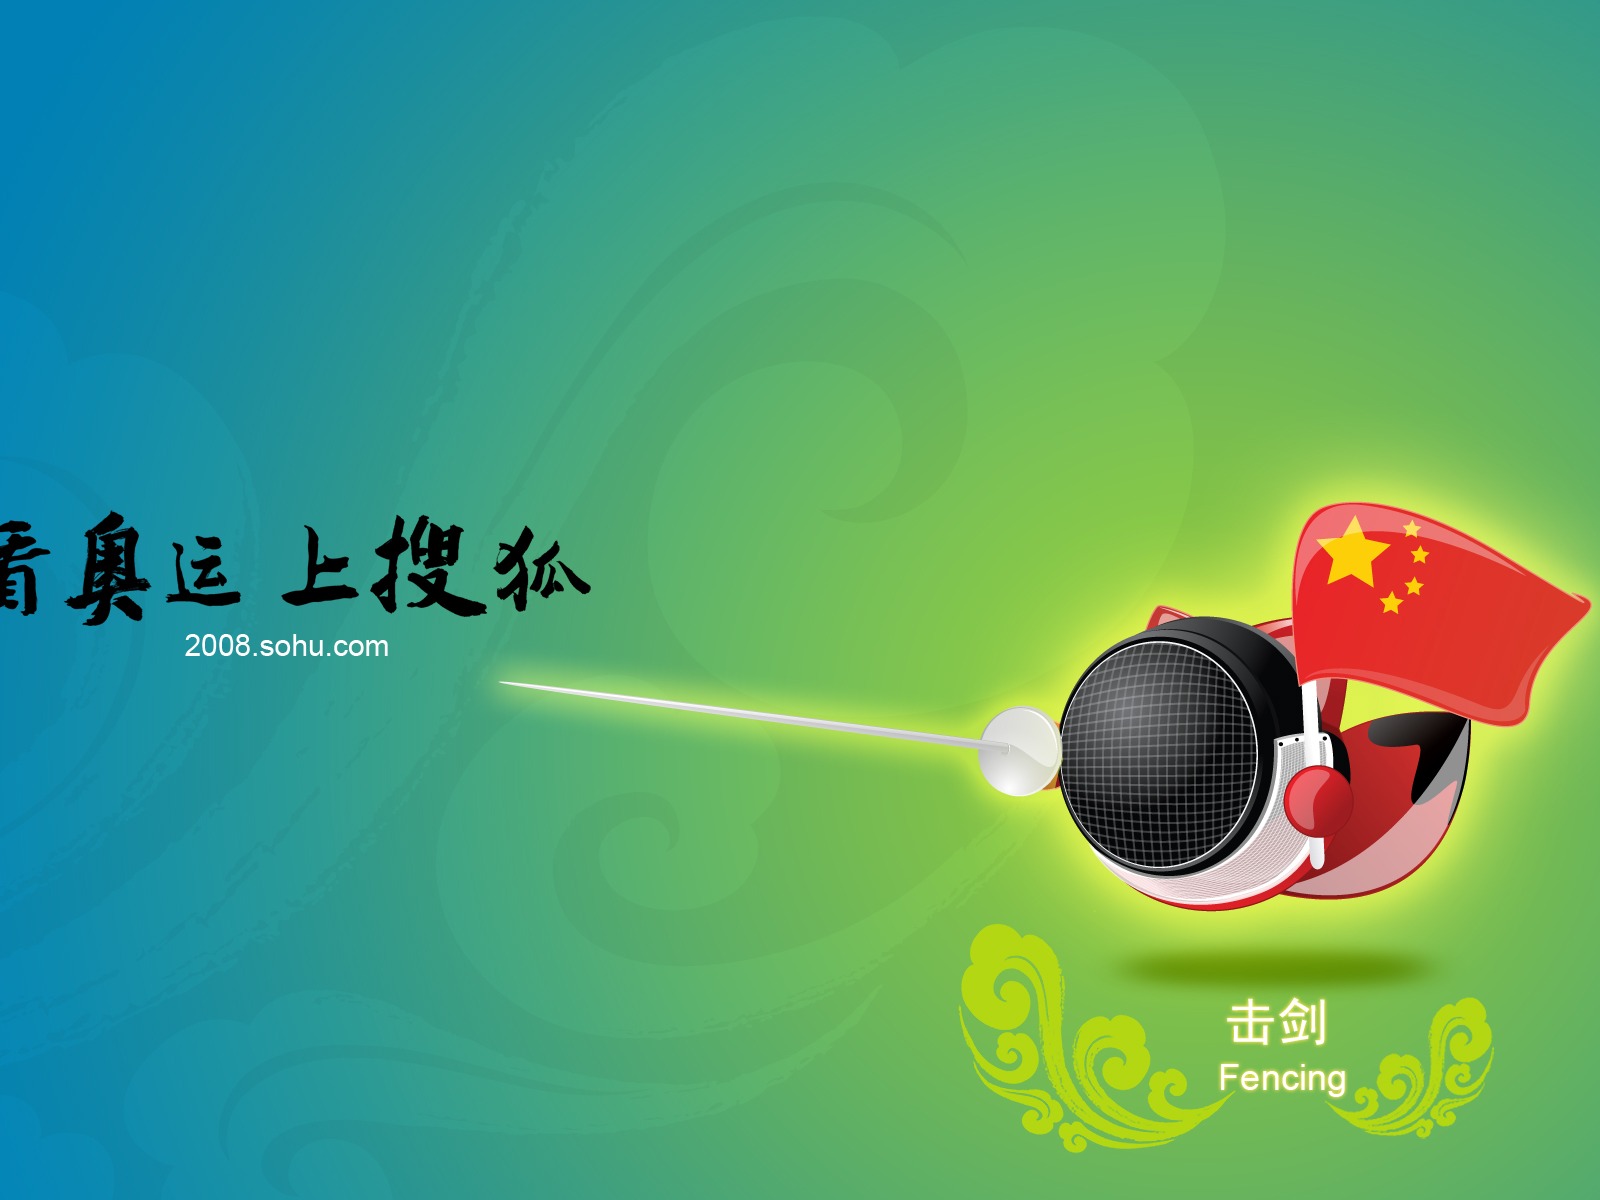 Sohu Olympic sports style wallpaper #19 - 1600x1200